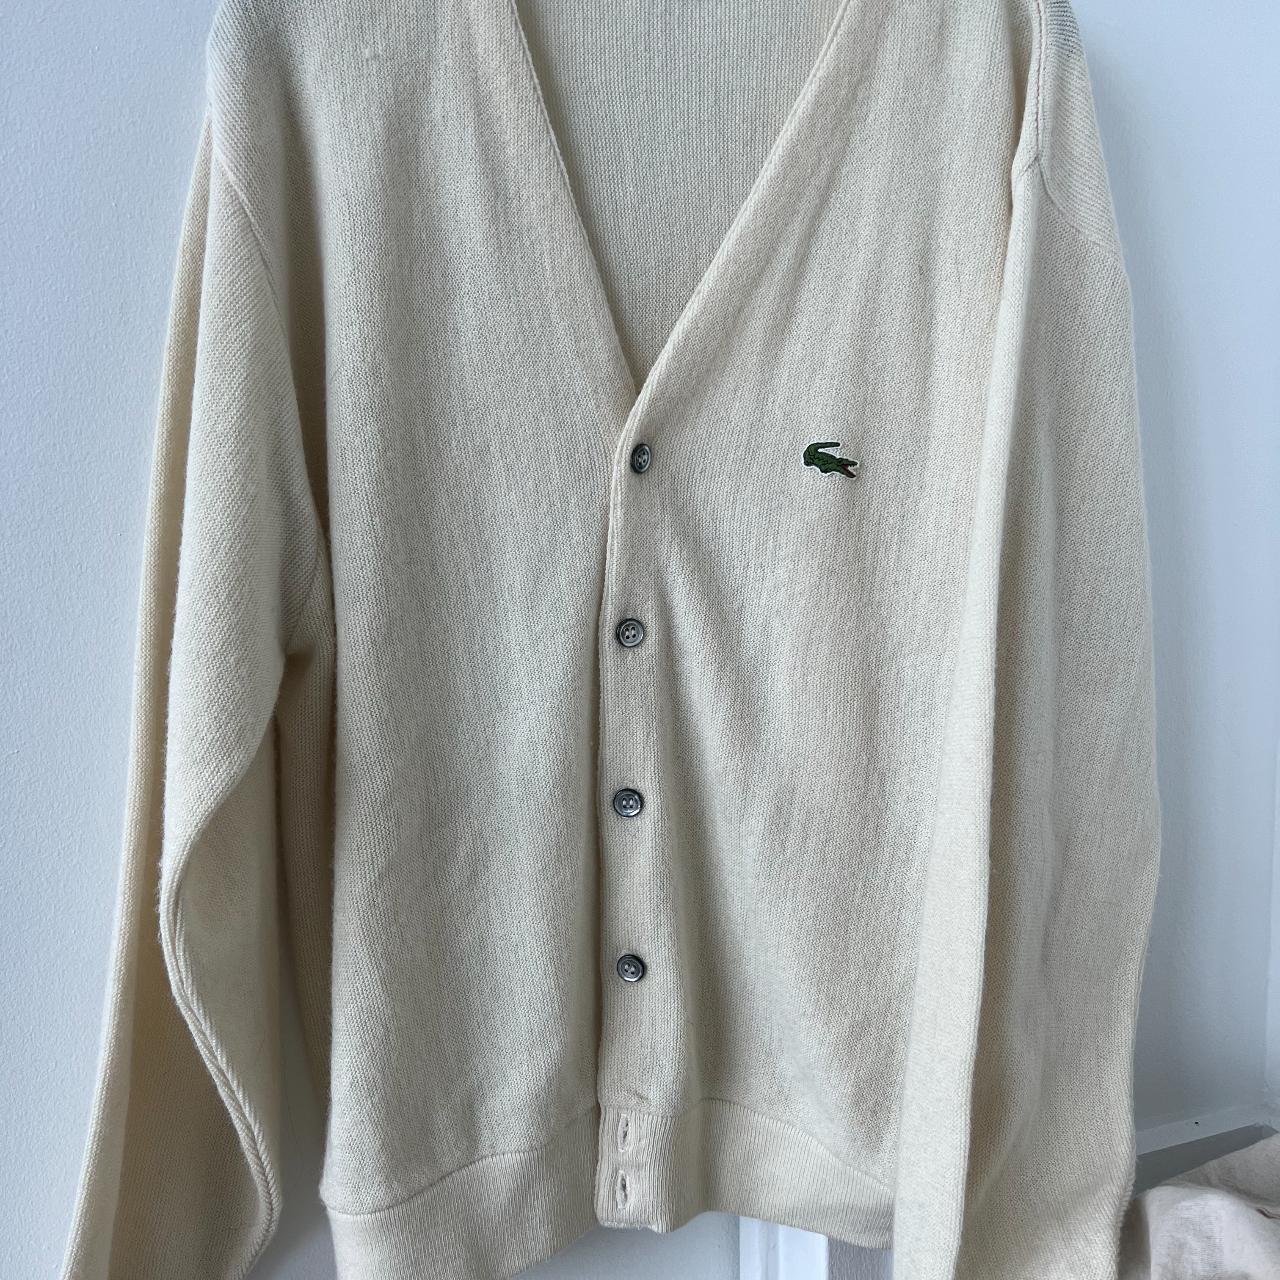 Vintage Lacoste Knit Cardigan Sweater in AMAZING... - Depop